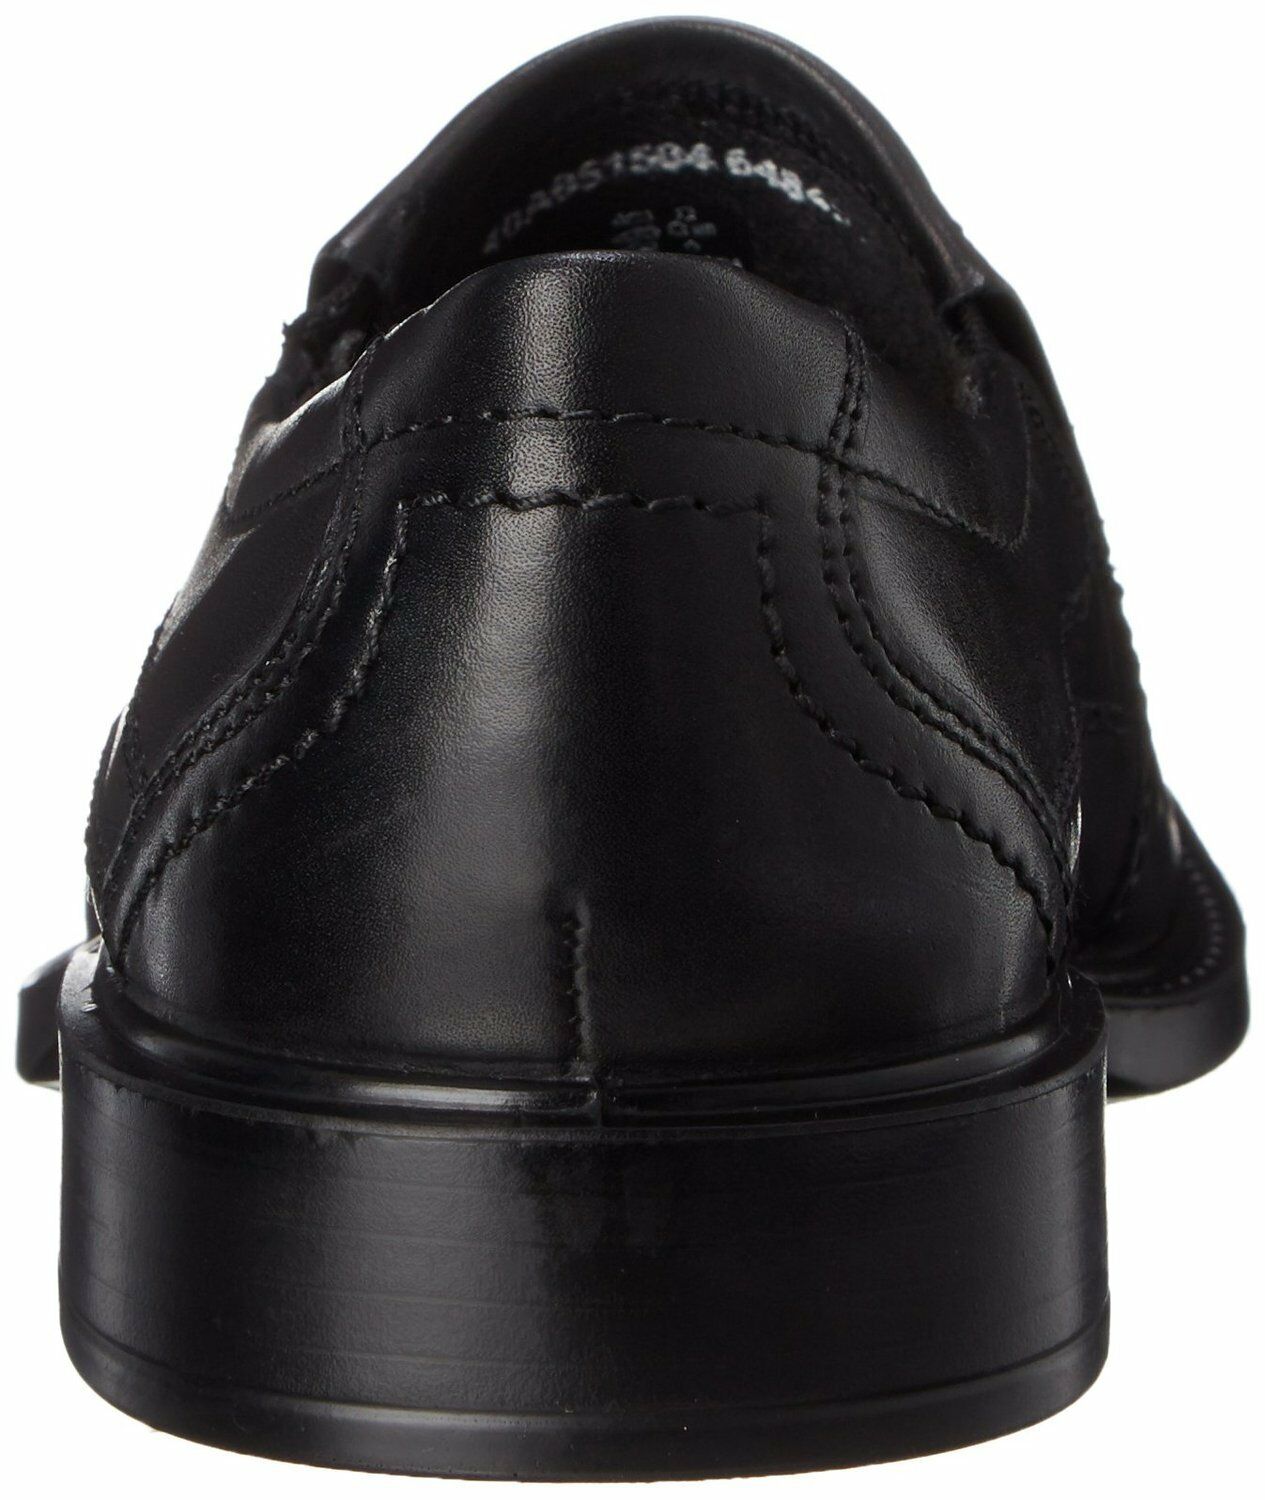 Ecco Men's 51504 New Jersey Black Leather Slip On Loafer